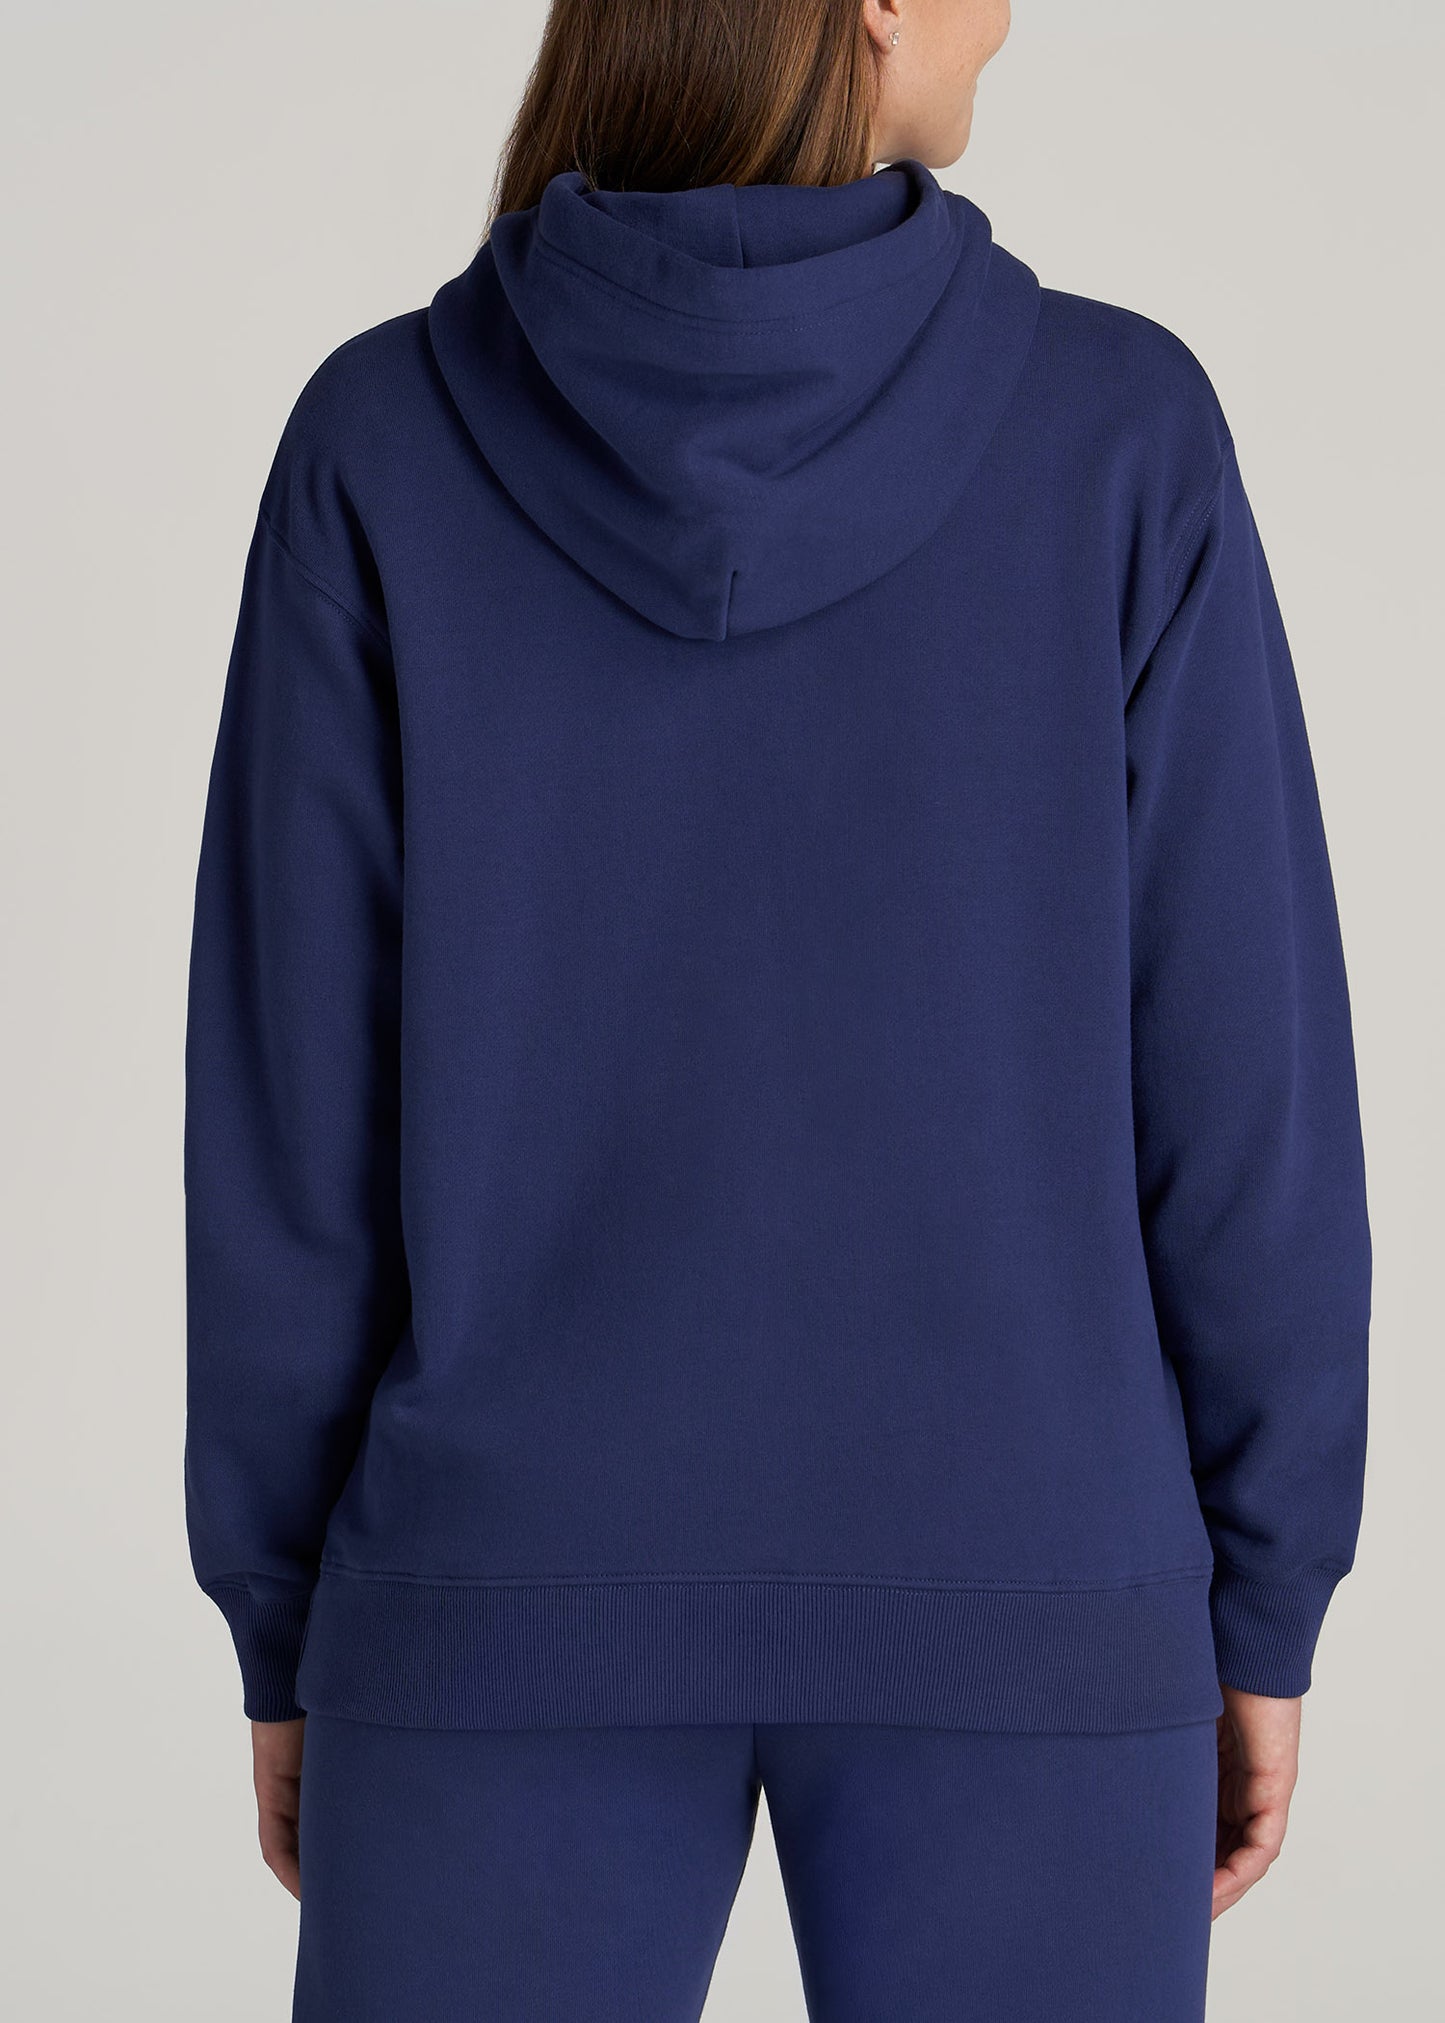 Women's hoodie Everlast Taylor - Sweatshirts - The Heights